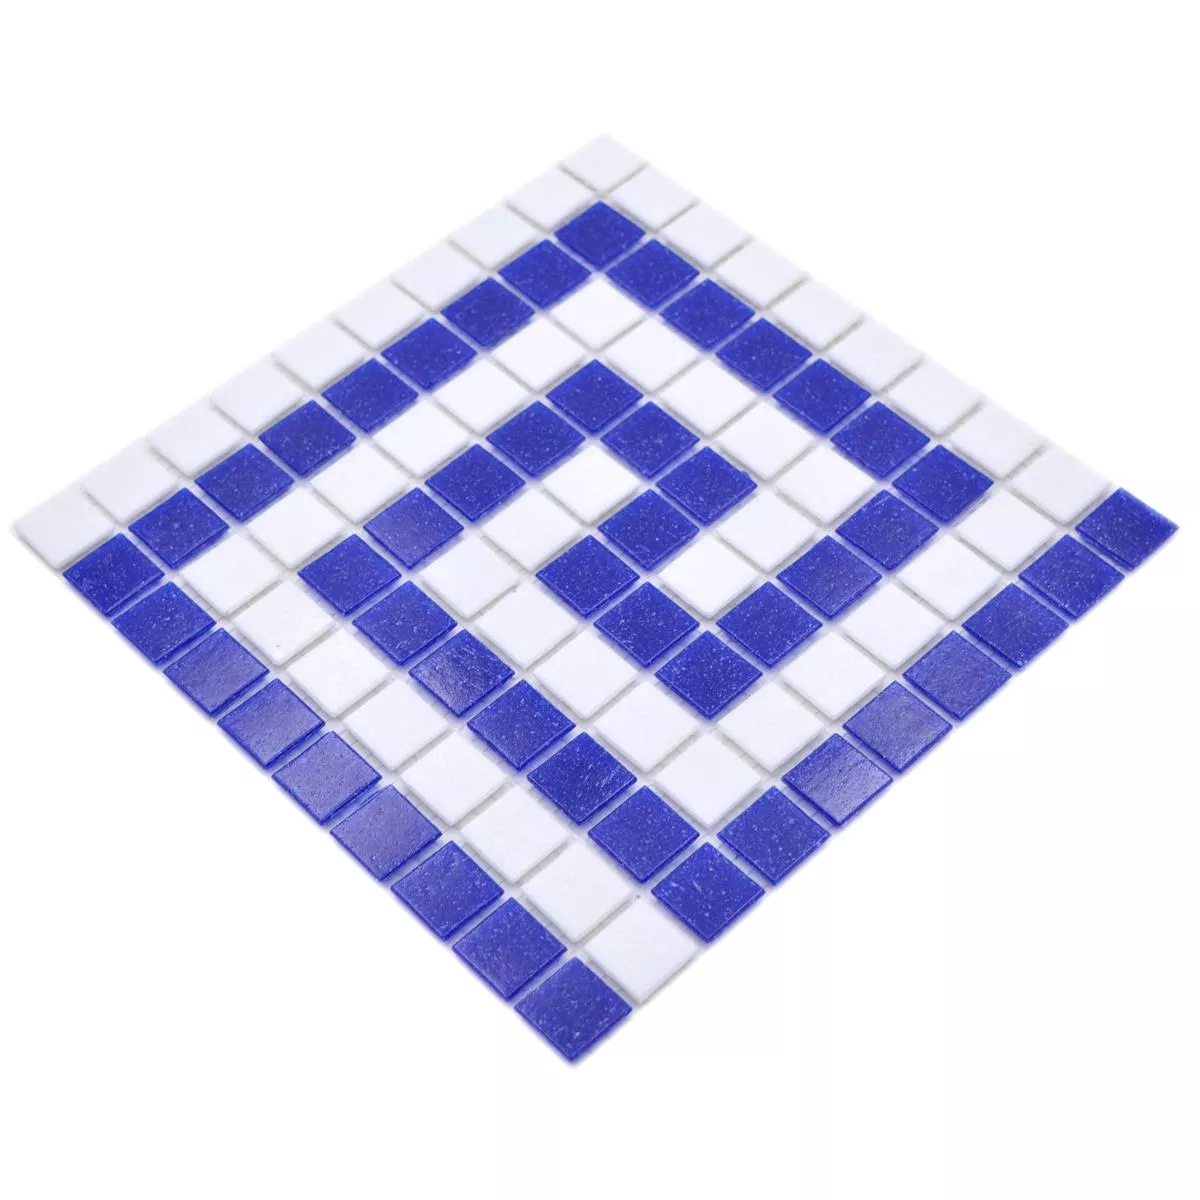 Schwimmbad Pool Mosaik Filyos Blau Weiß Papierverklebt